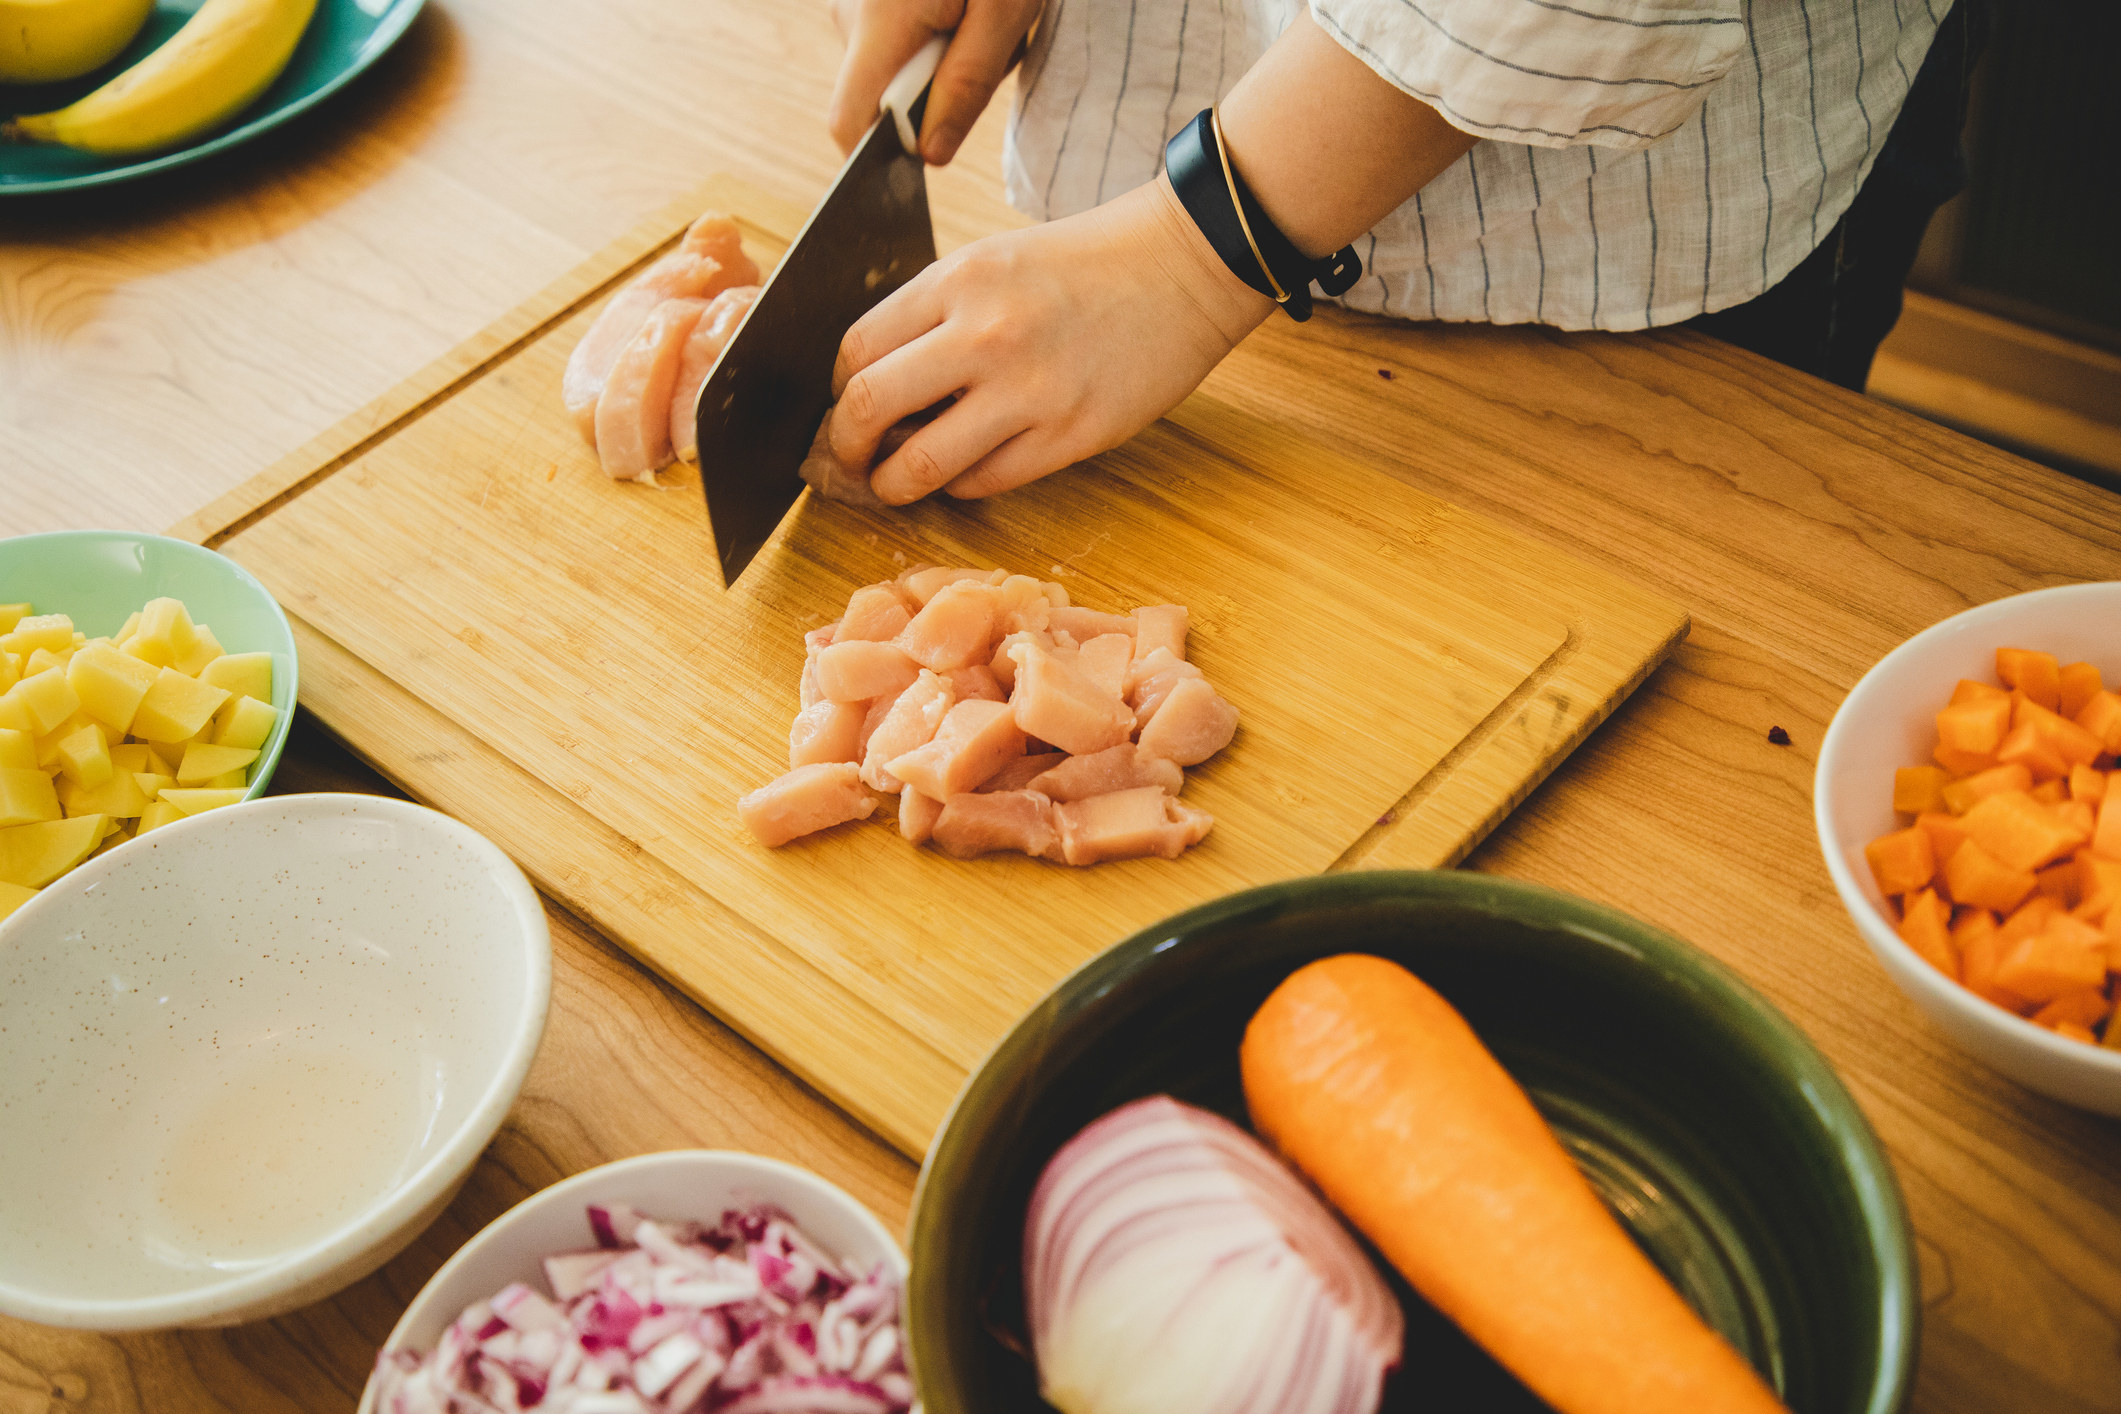 A woman slicing raw chicken.